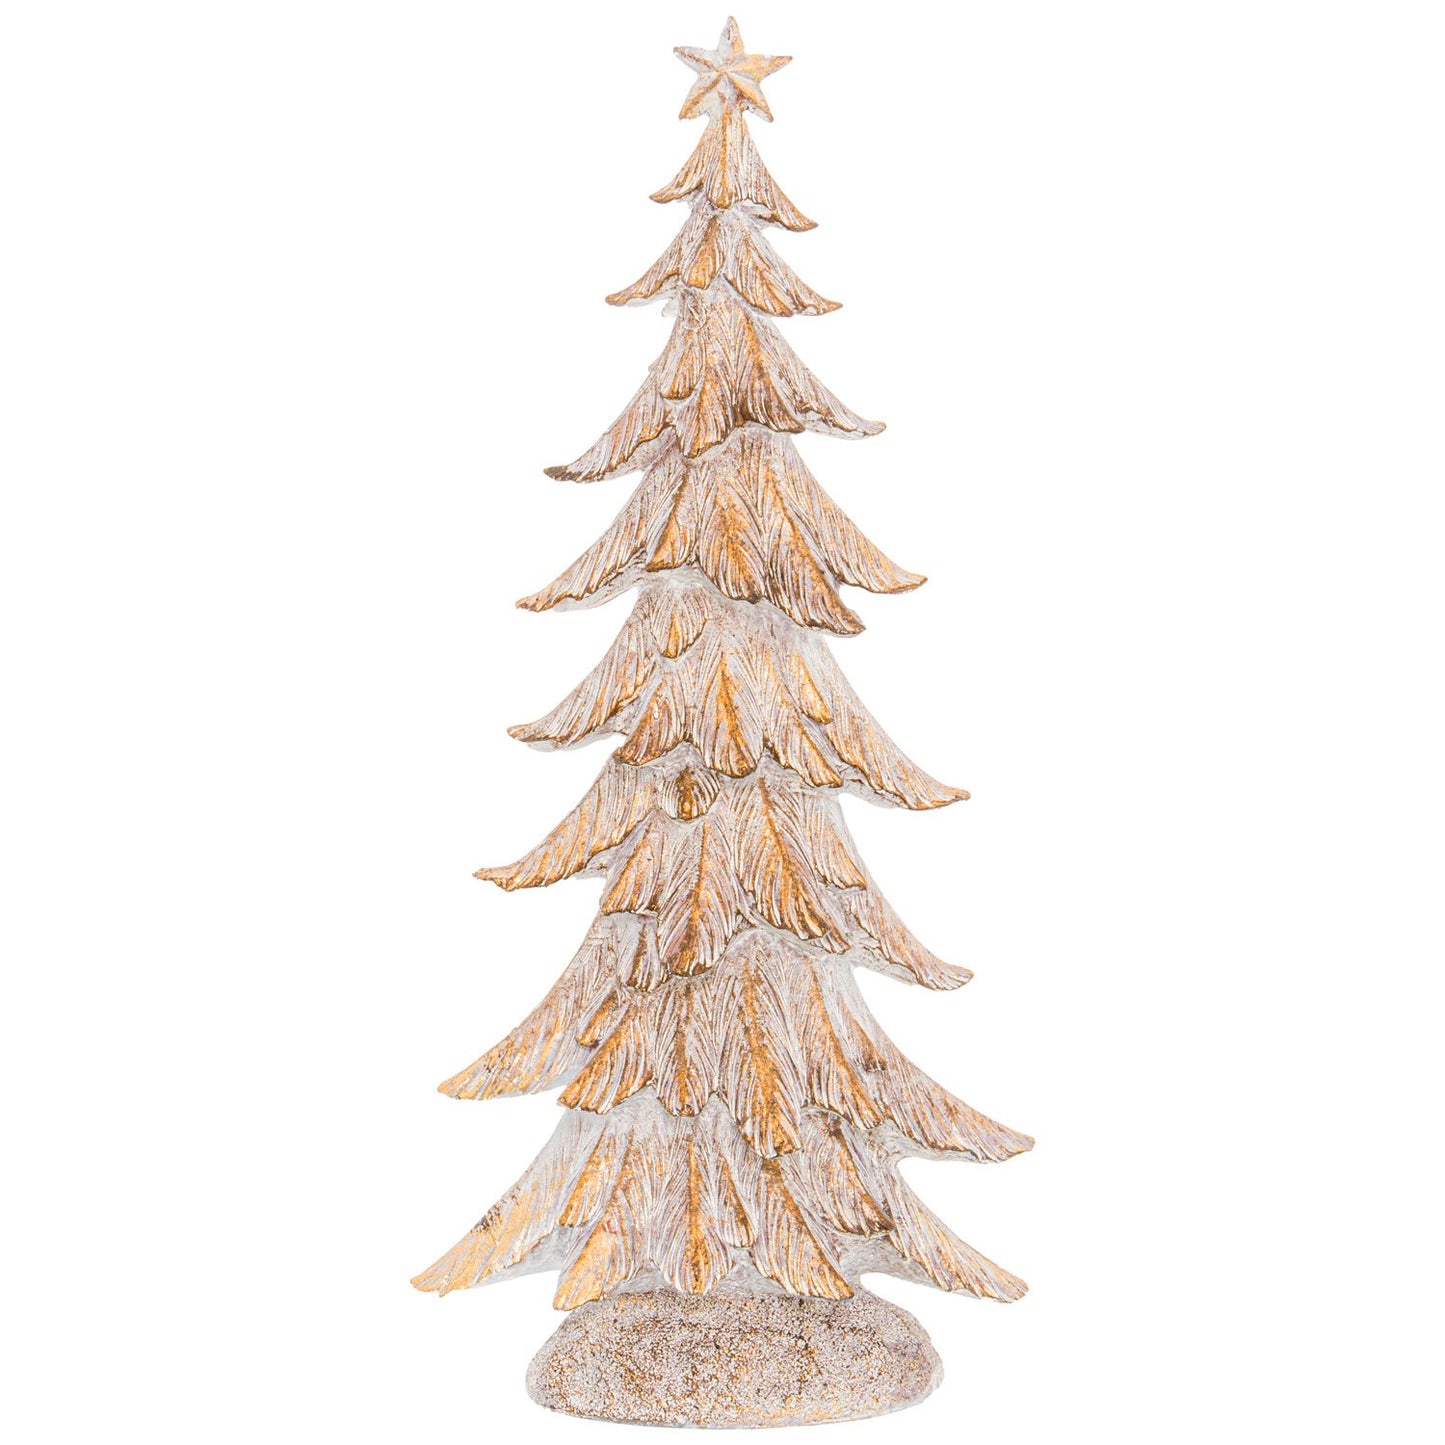 Tall Gold Christmas Tree Ornament